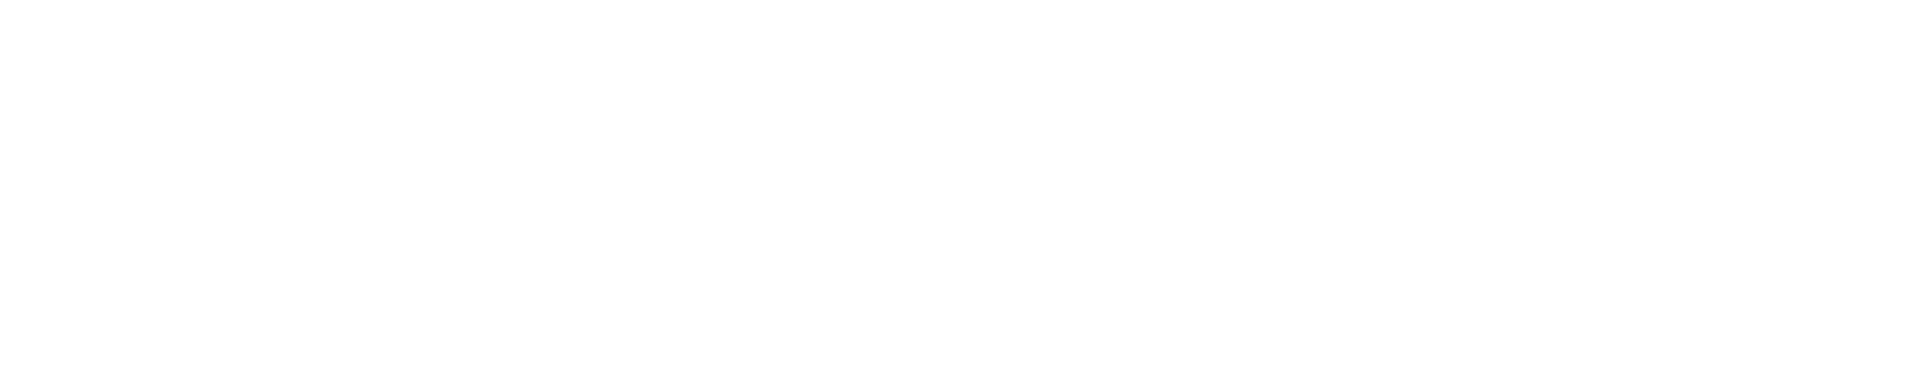 logo easycode